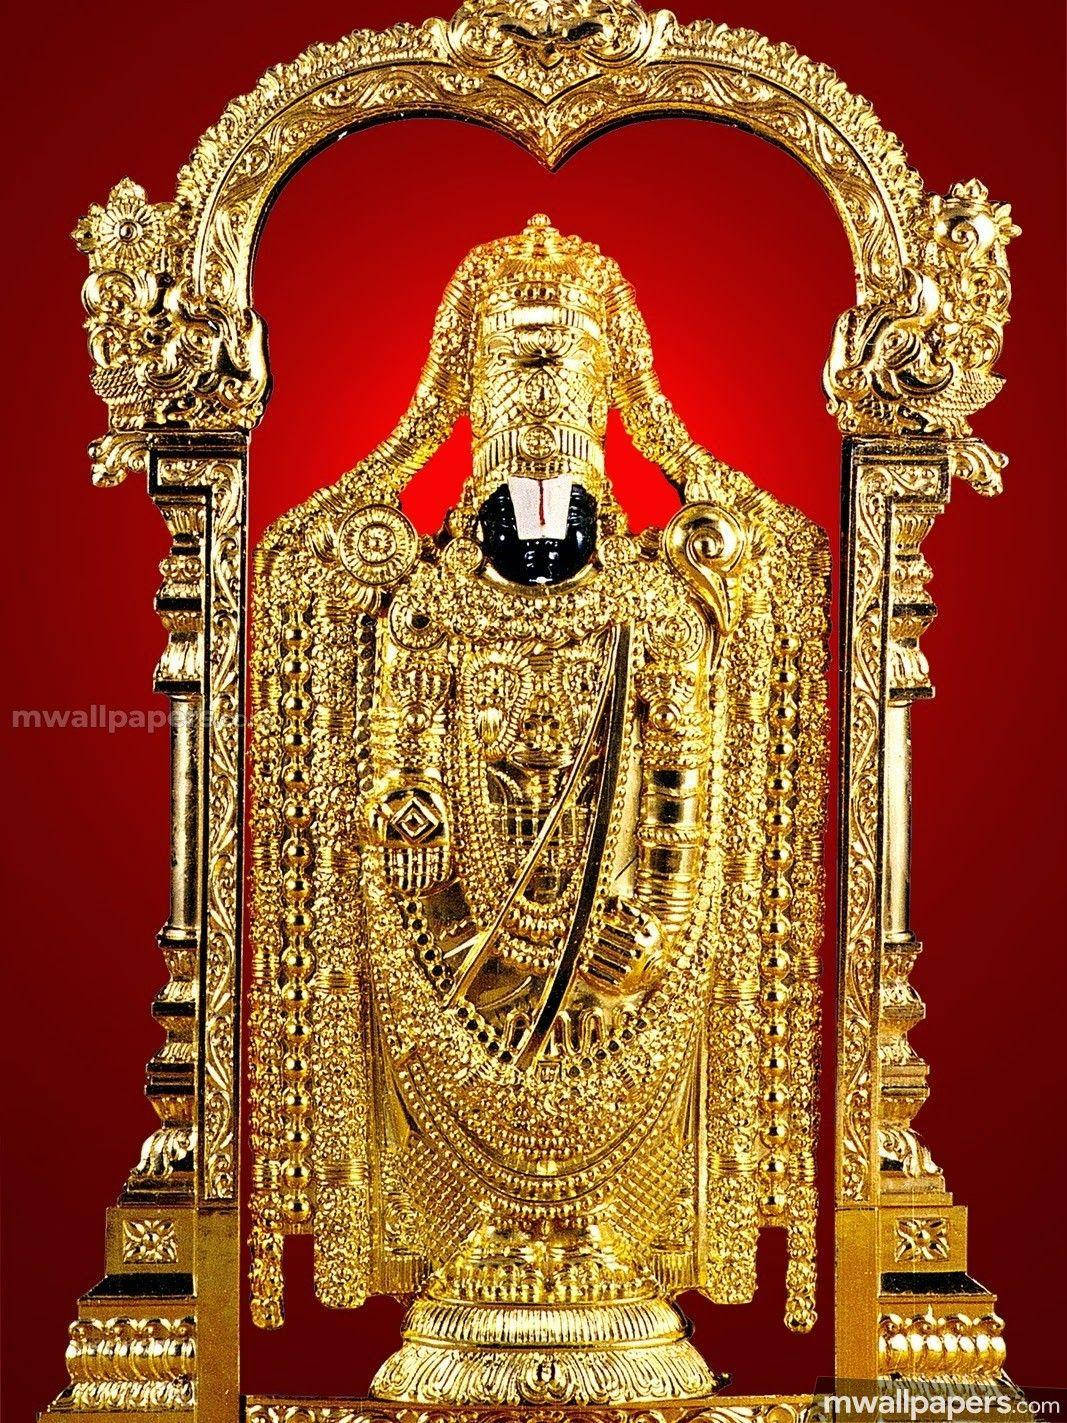 Majestic Statue Of Lord Venkateswara In Tirupati Balaji